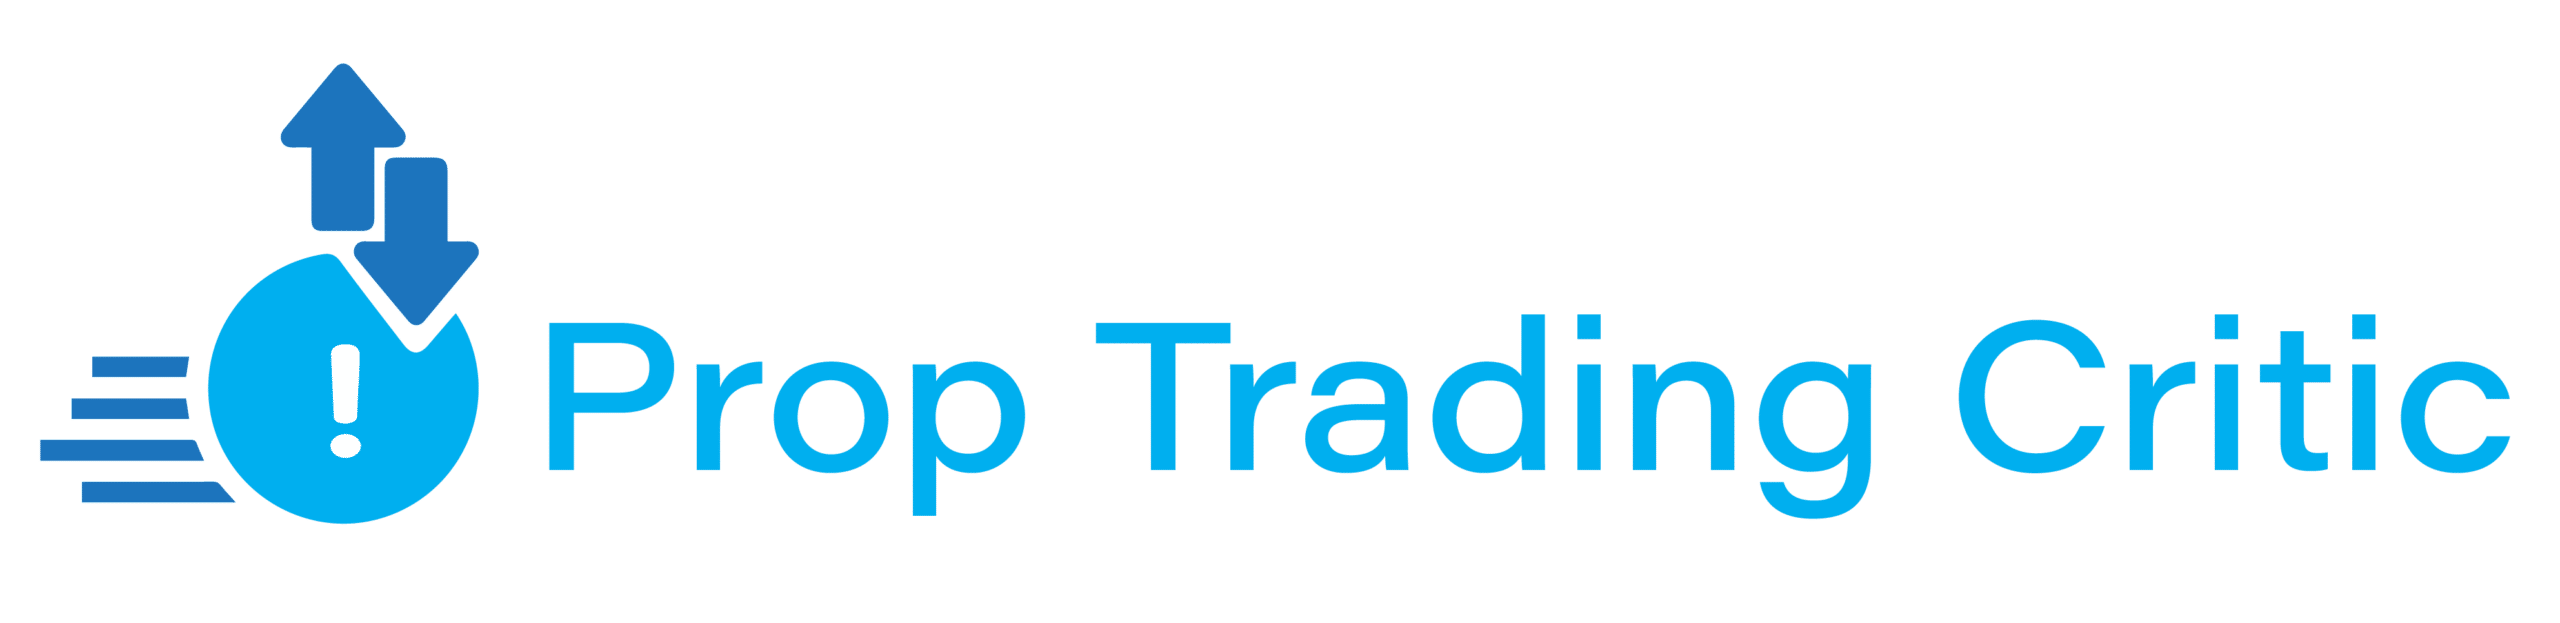 Prop Trading Critic Logo